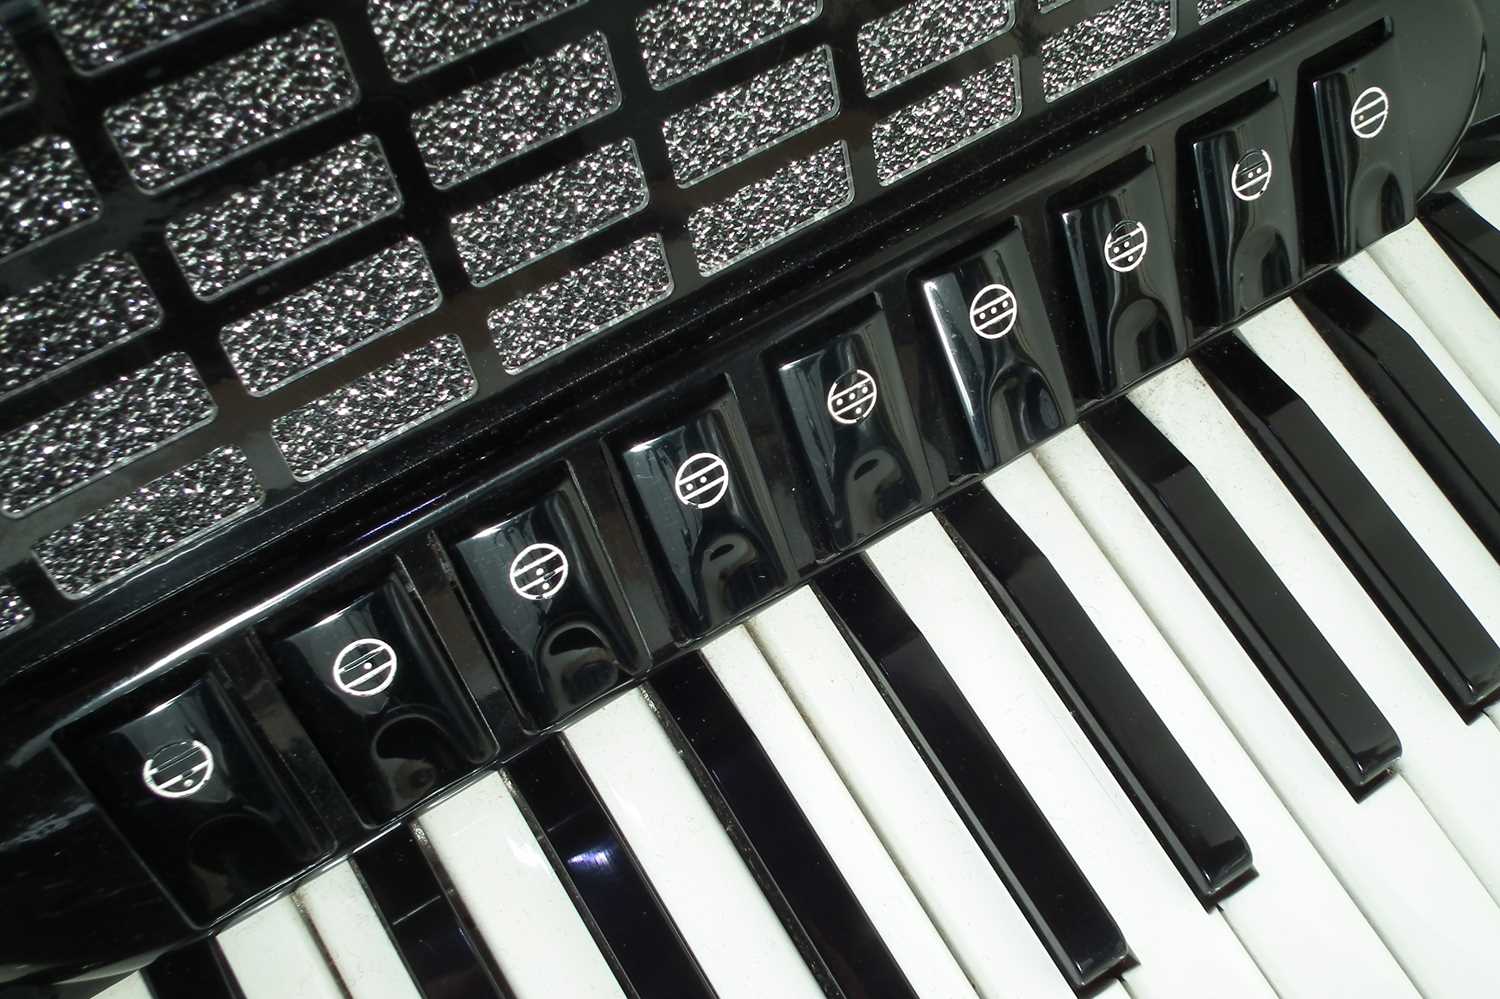 Menghini piano accordion - Image 6 of 10